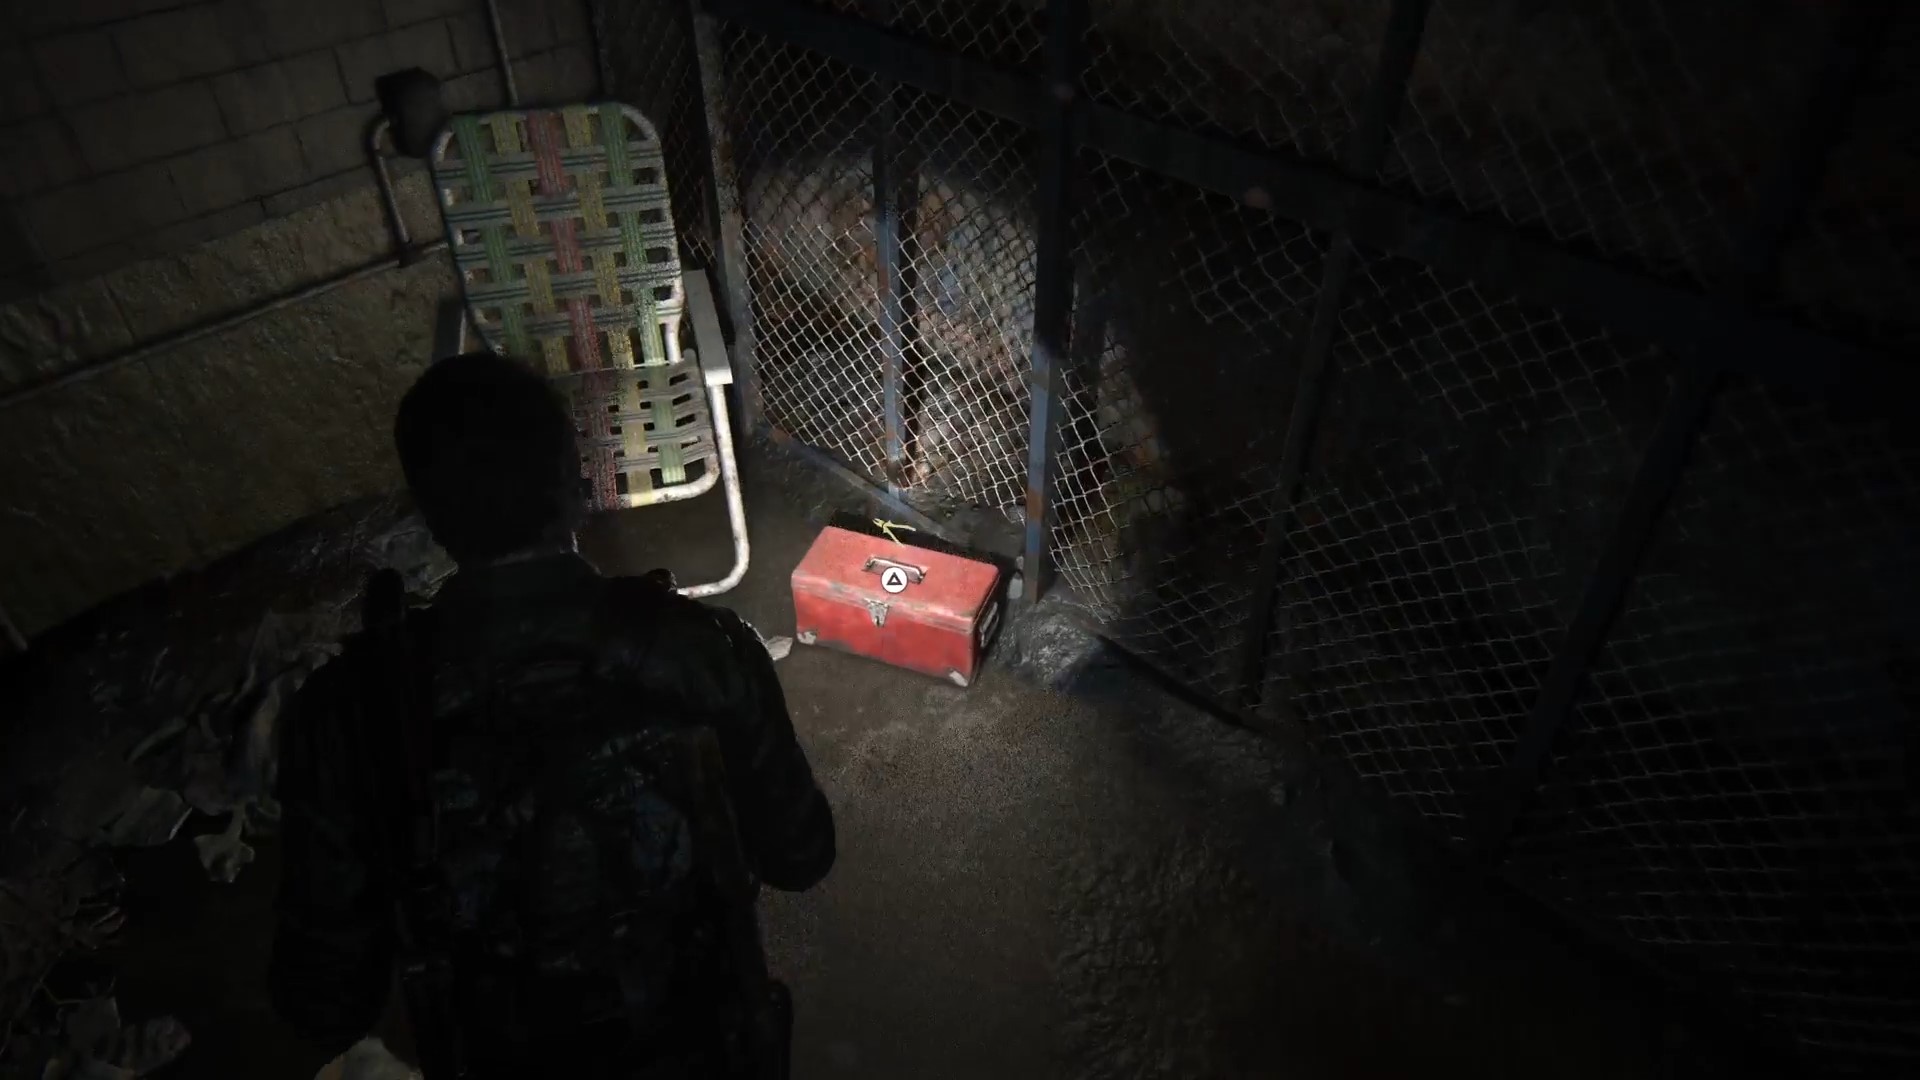 The Last of Us tool locations